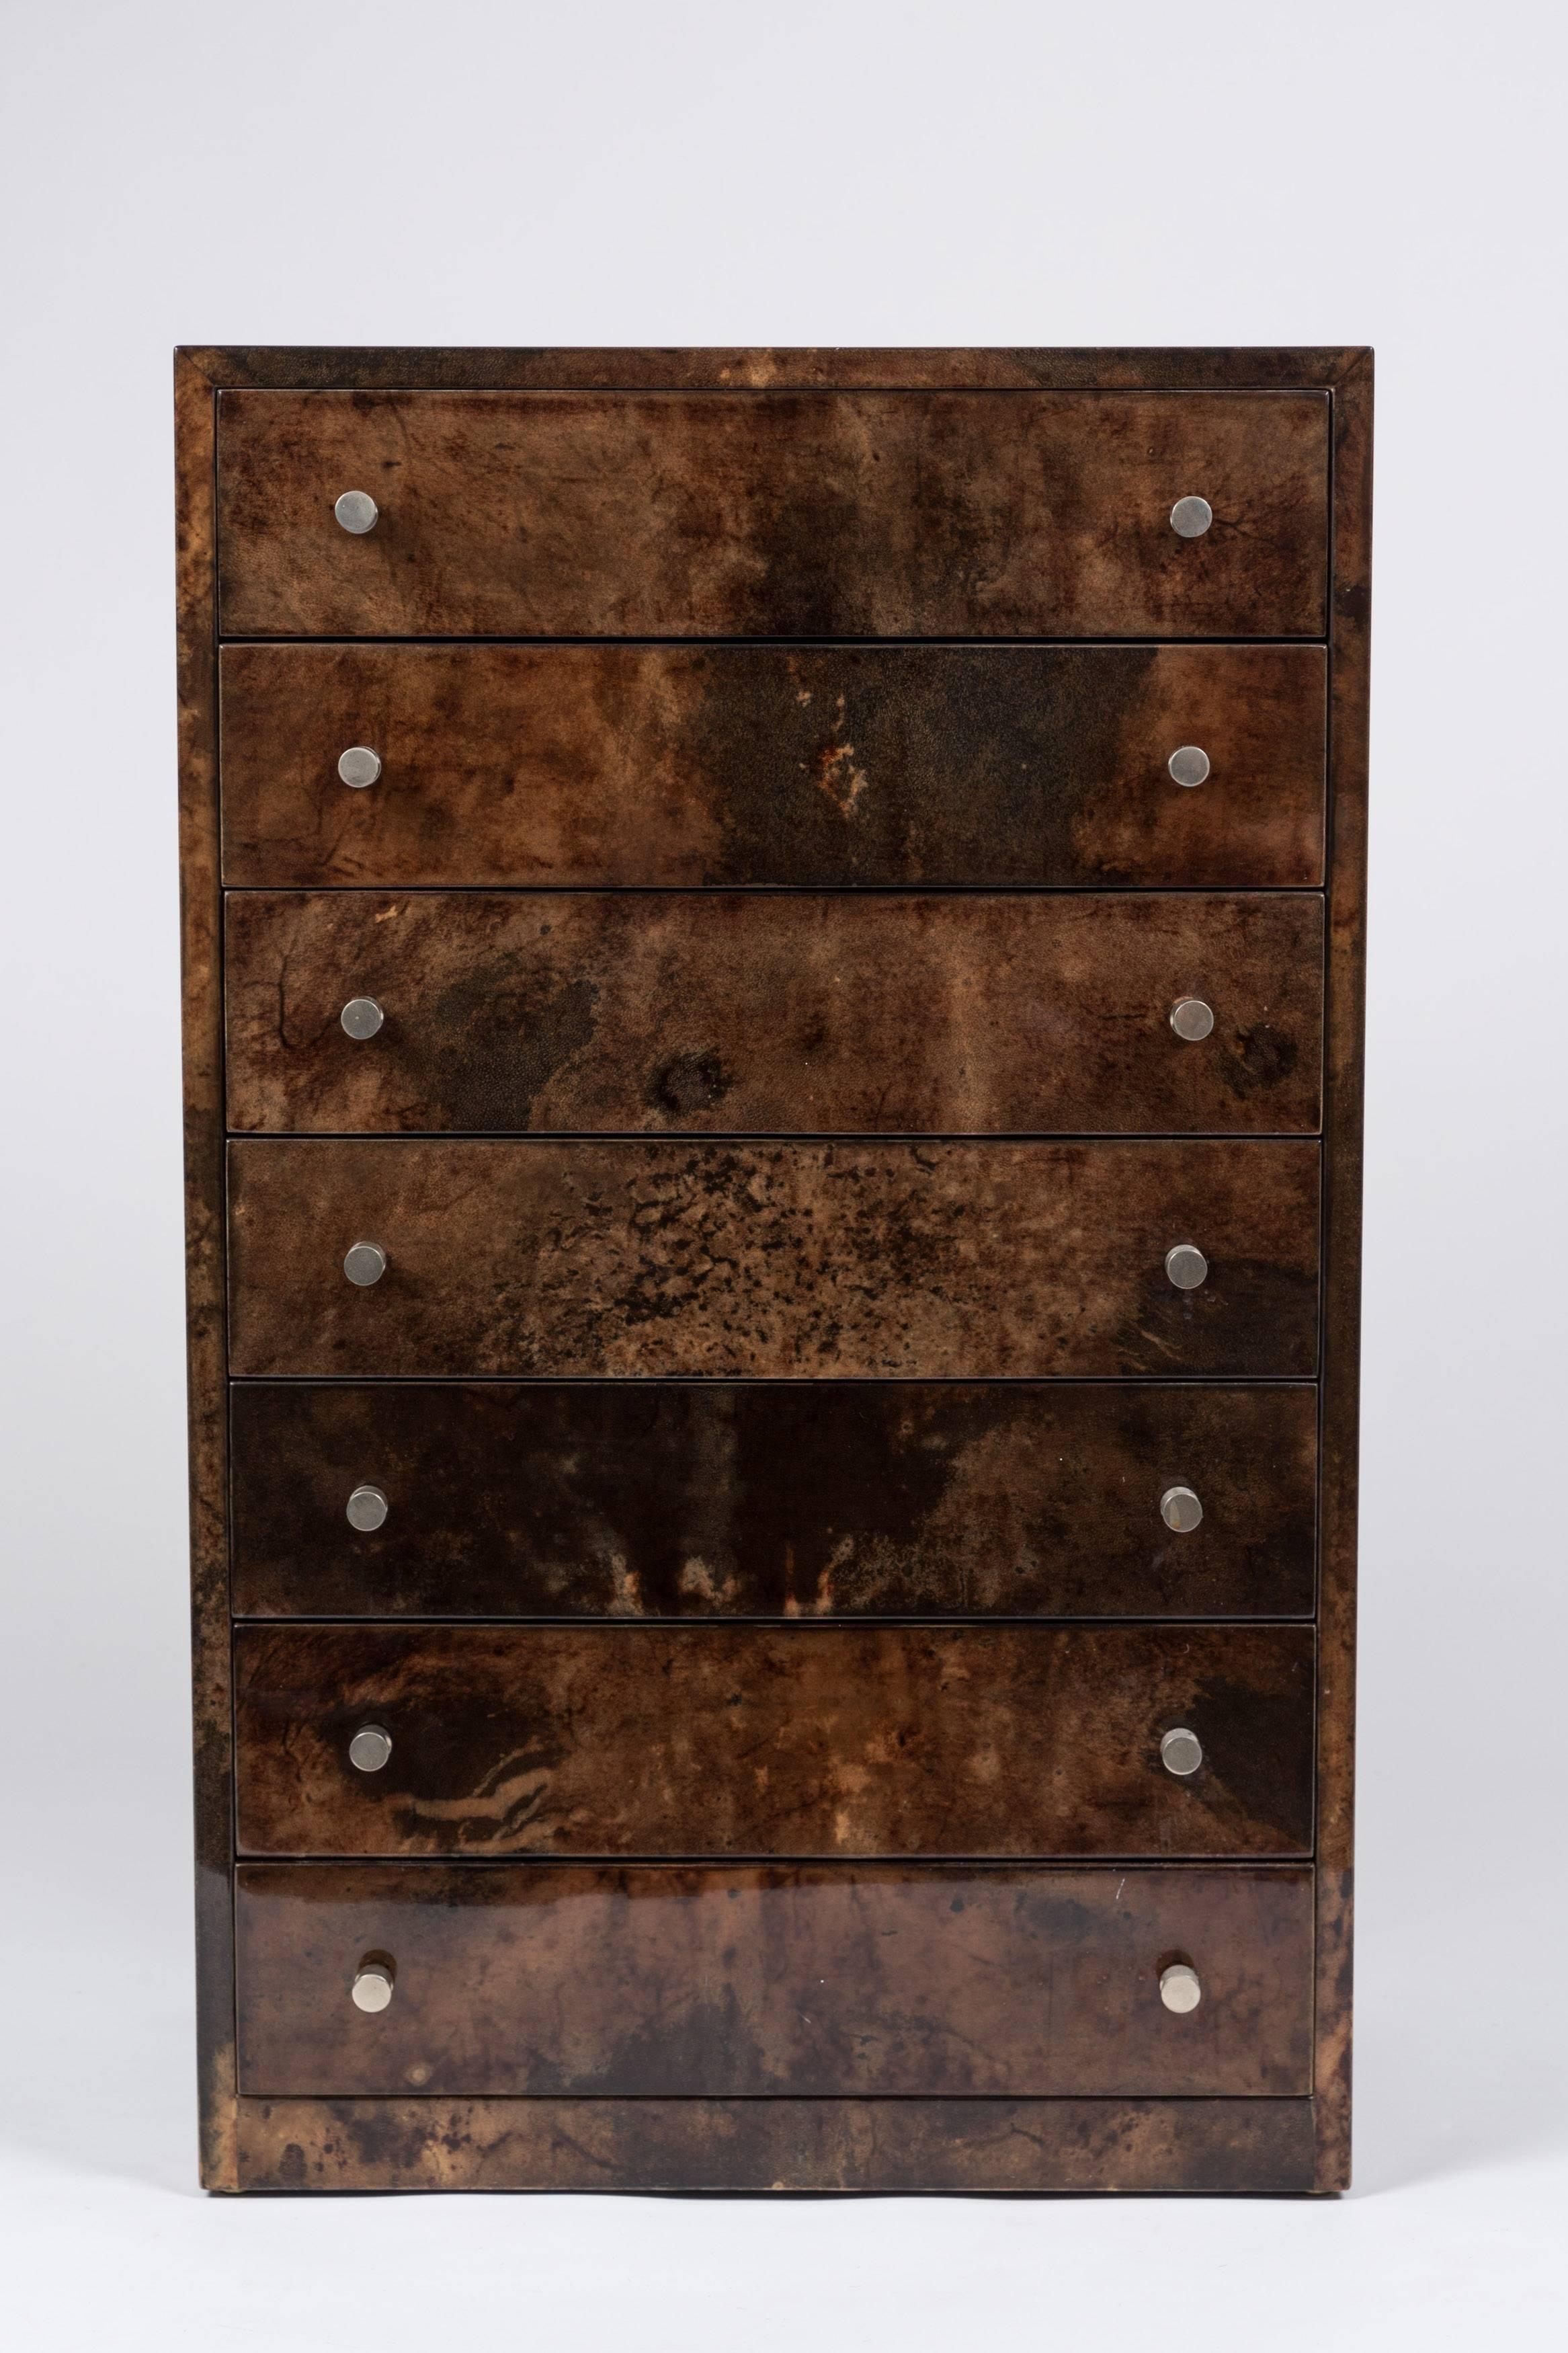 1960s Italian Alto Tura lacquered goatskin chest with mahogany interiors and original satin chrome pulls.